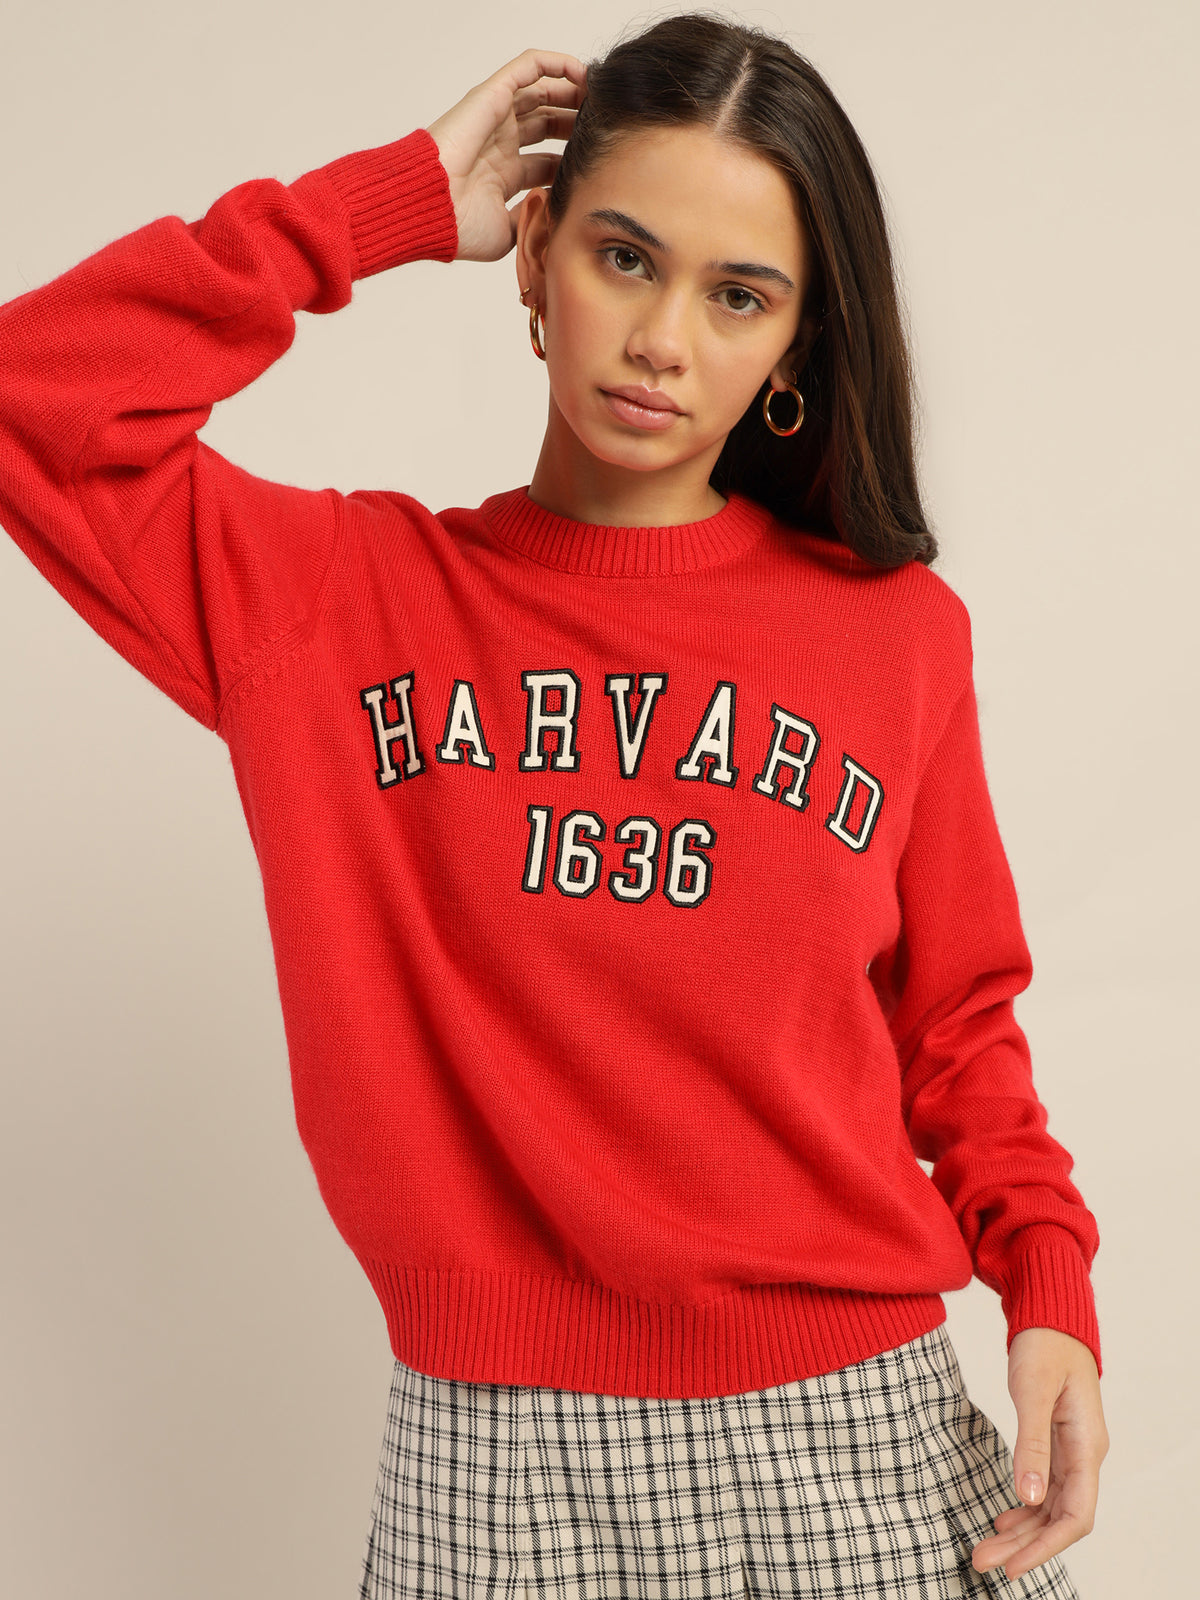 Harvard Est. 1636 Knit in Crimson